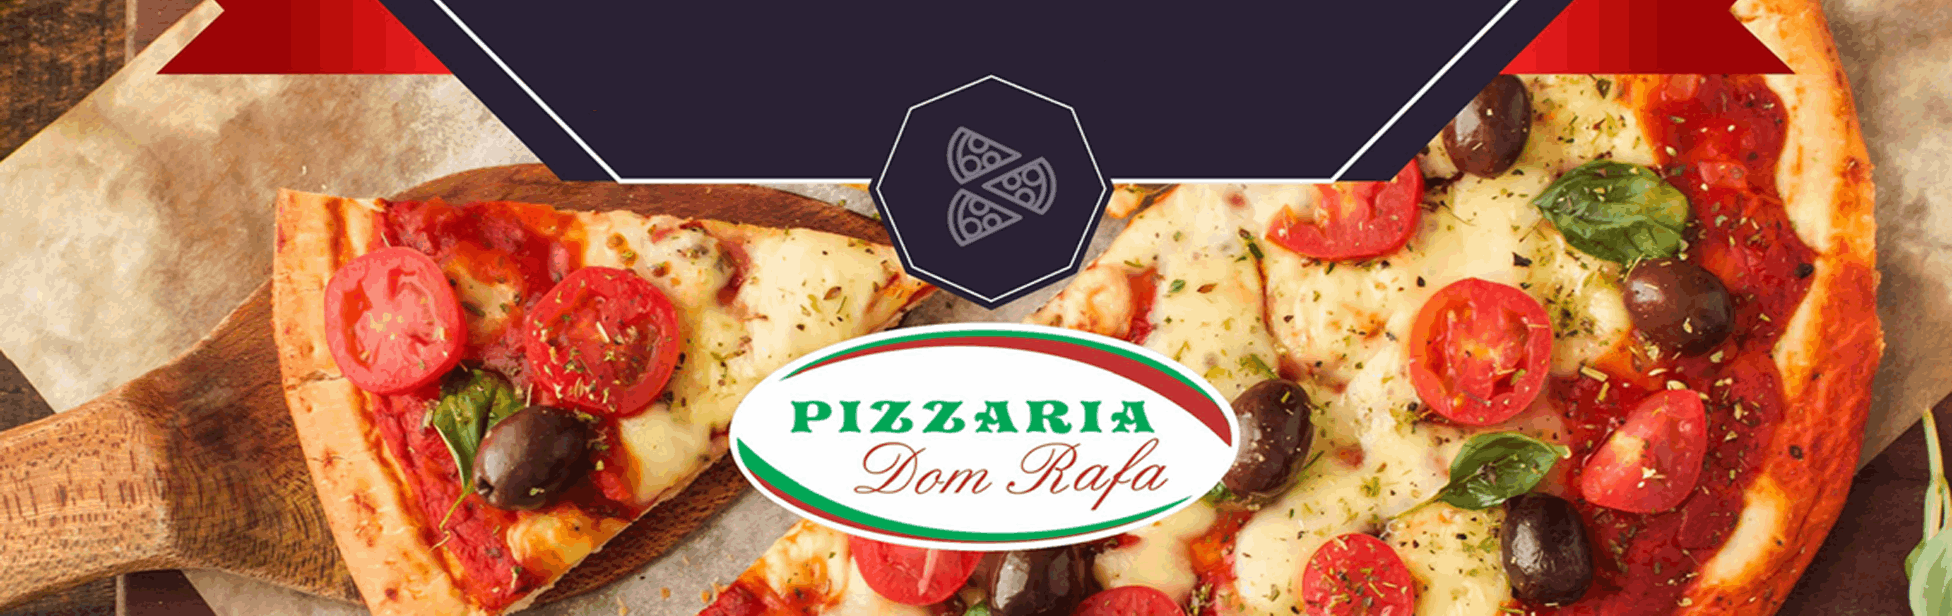 Pizzaria Dom Rafa Whatsapp